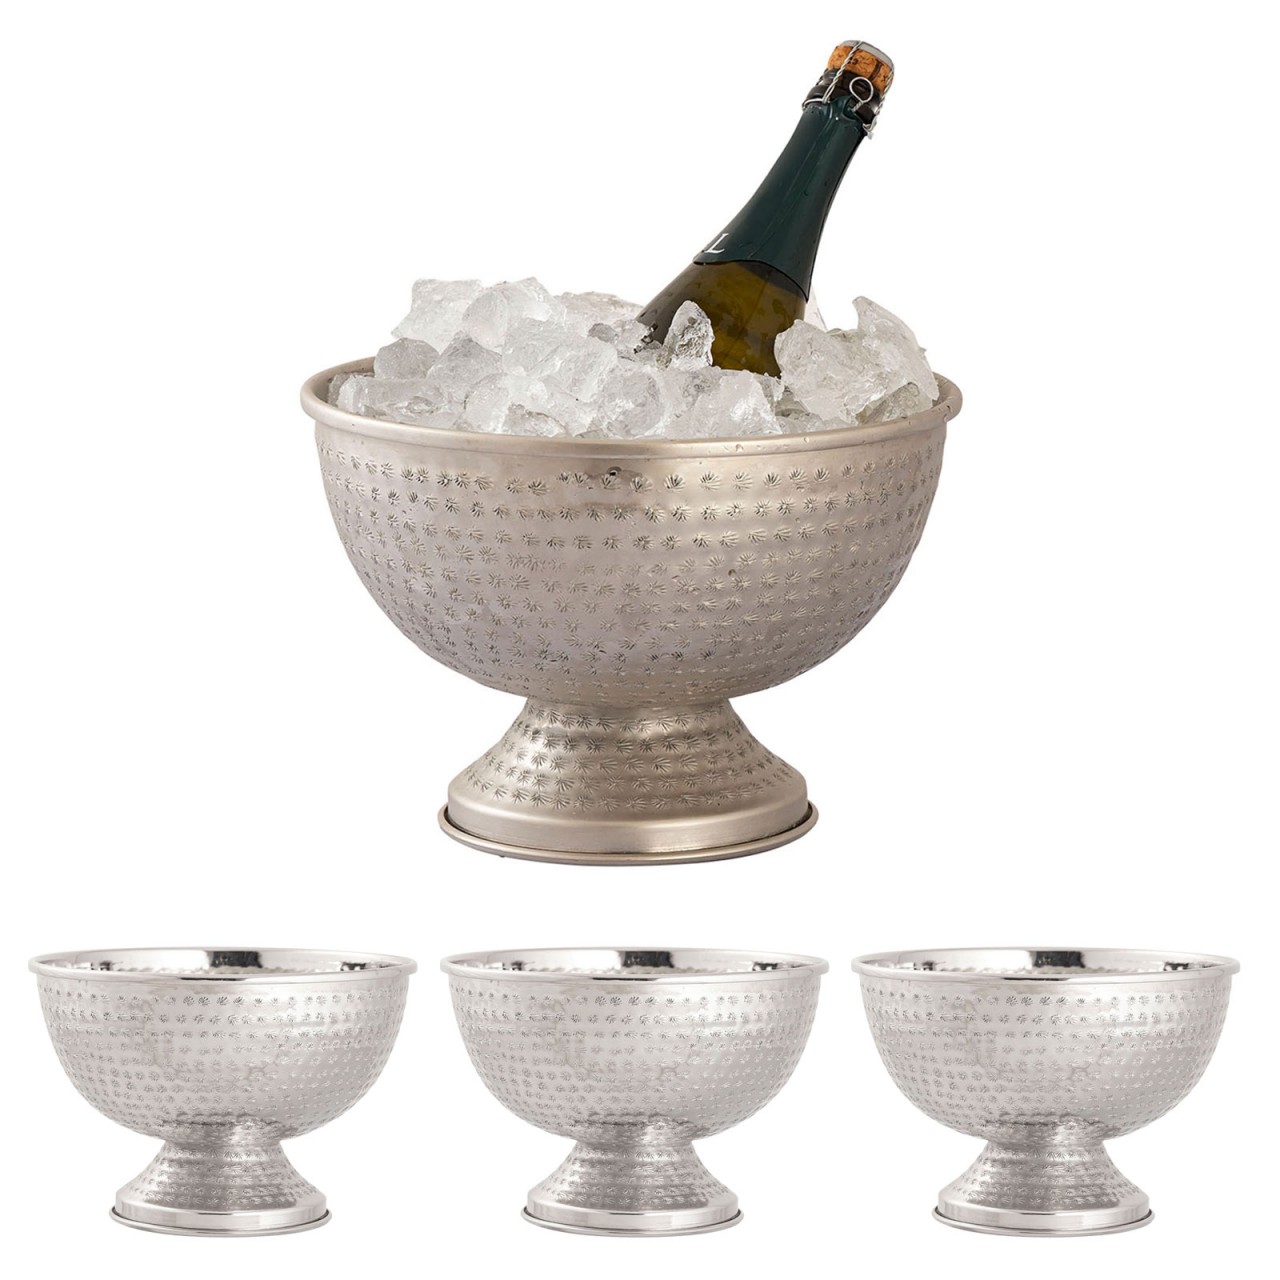 Flaschenkühler Weinkühler 4-teilig Metall ø 29 cm Sektkühler rund silber gold Eiskühler Champagner